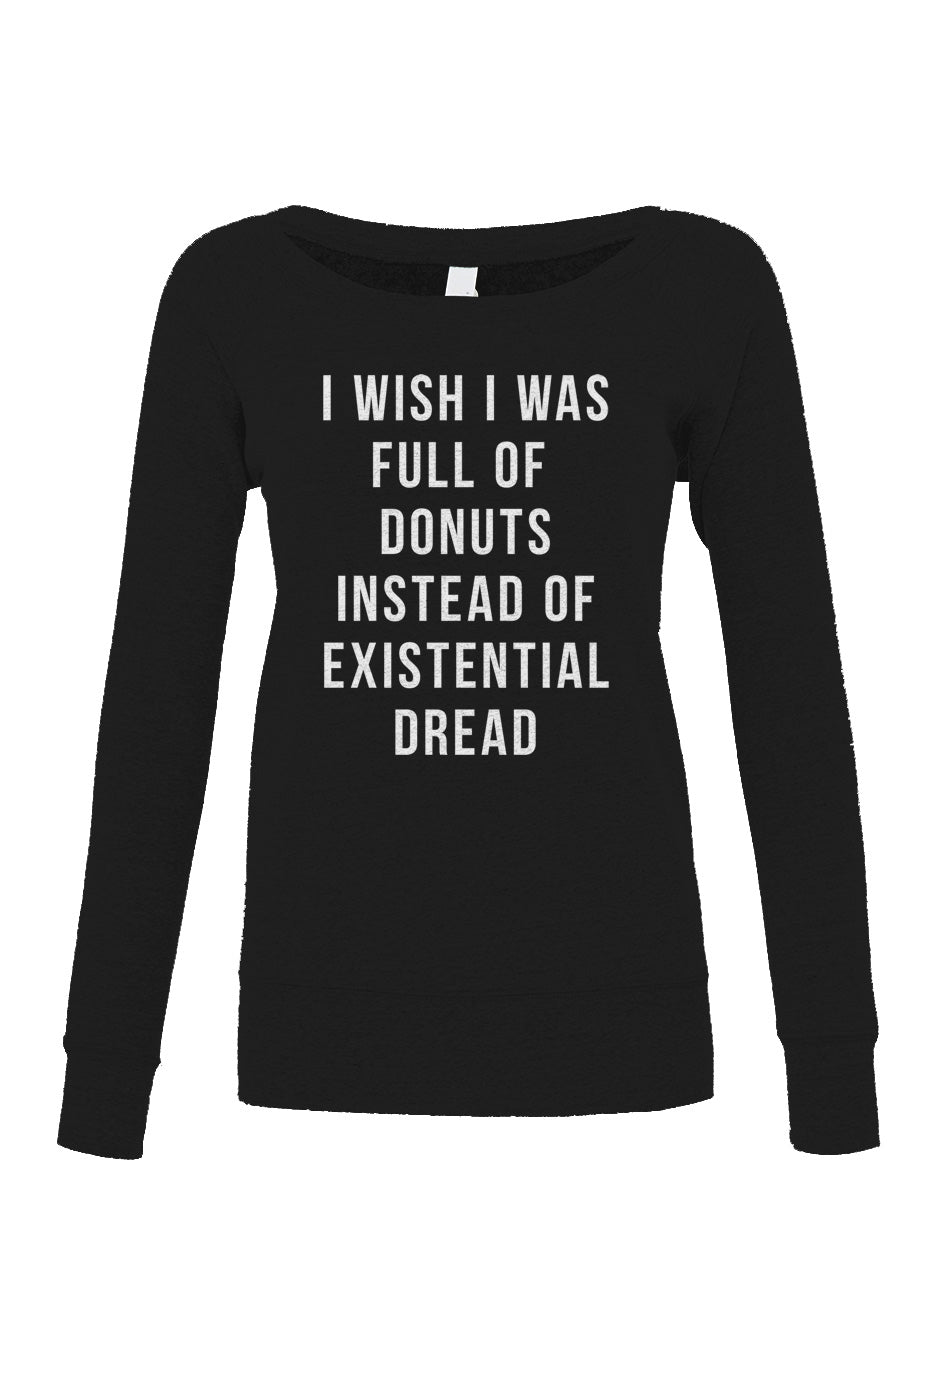 Women's I Wish I Was Full of Donuts Instead of Existential Dread Scoop Neck Fleece